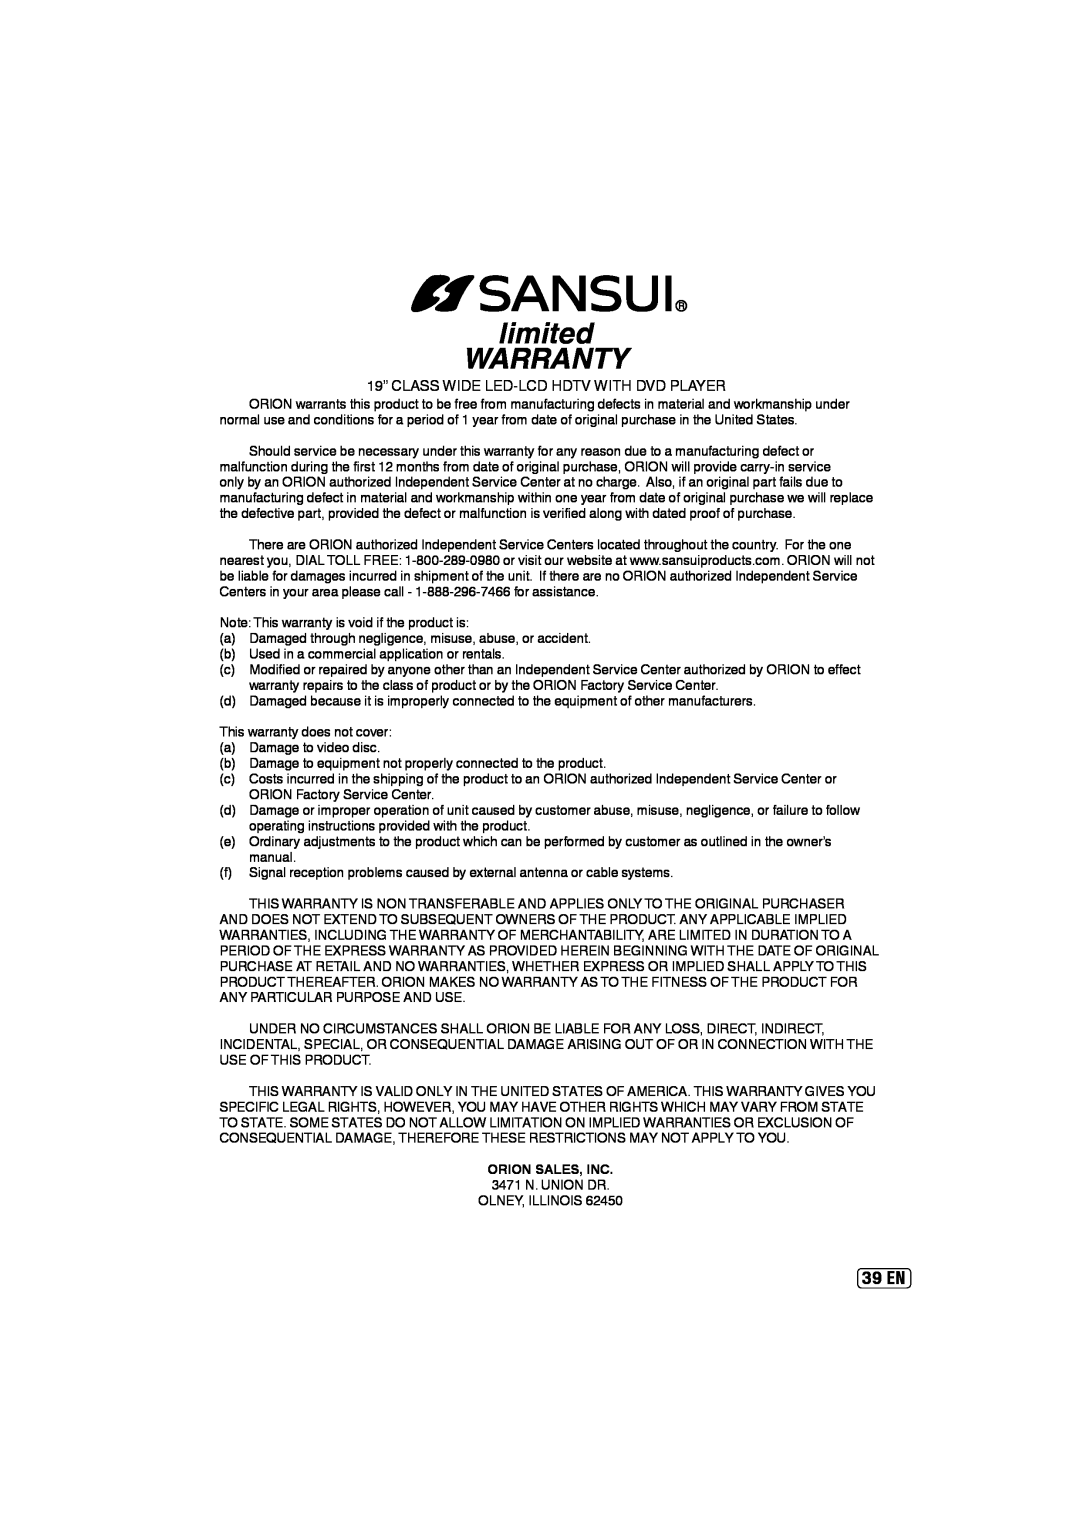 Sansui SLEDVD197 owner manual 39 EN, limited WARRANTY, Orion Sales, Inc 